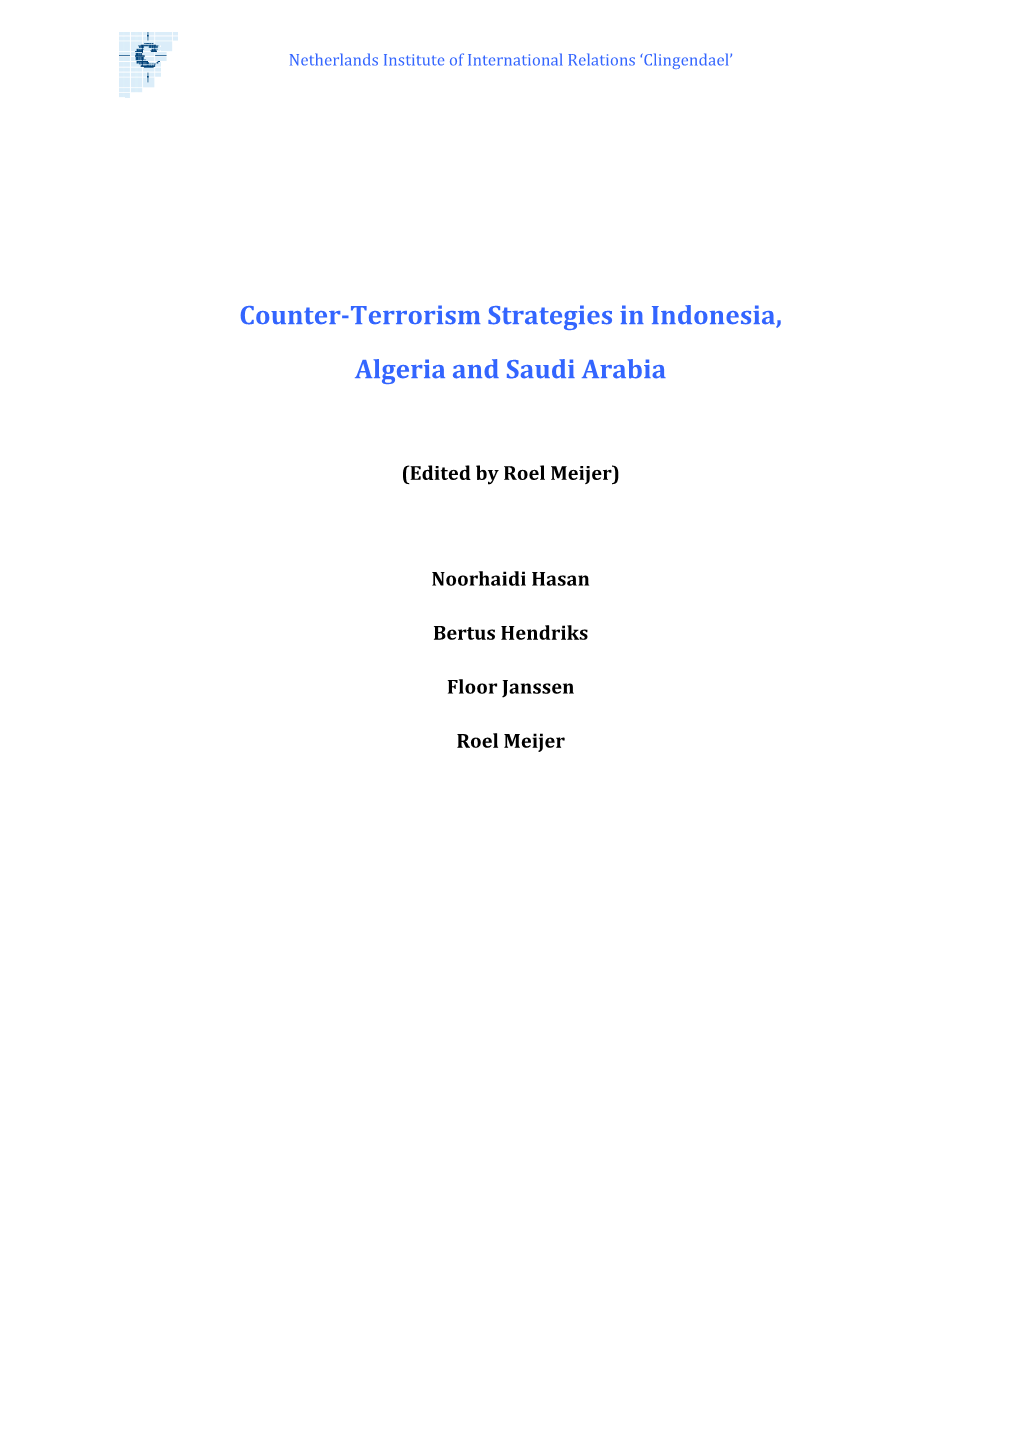 Counter-Terrorism Strategies in Indonesia, Algeria and Saudi Arabia